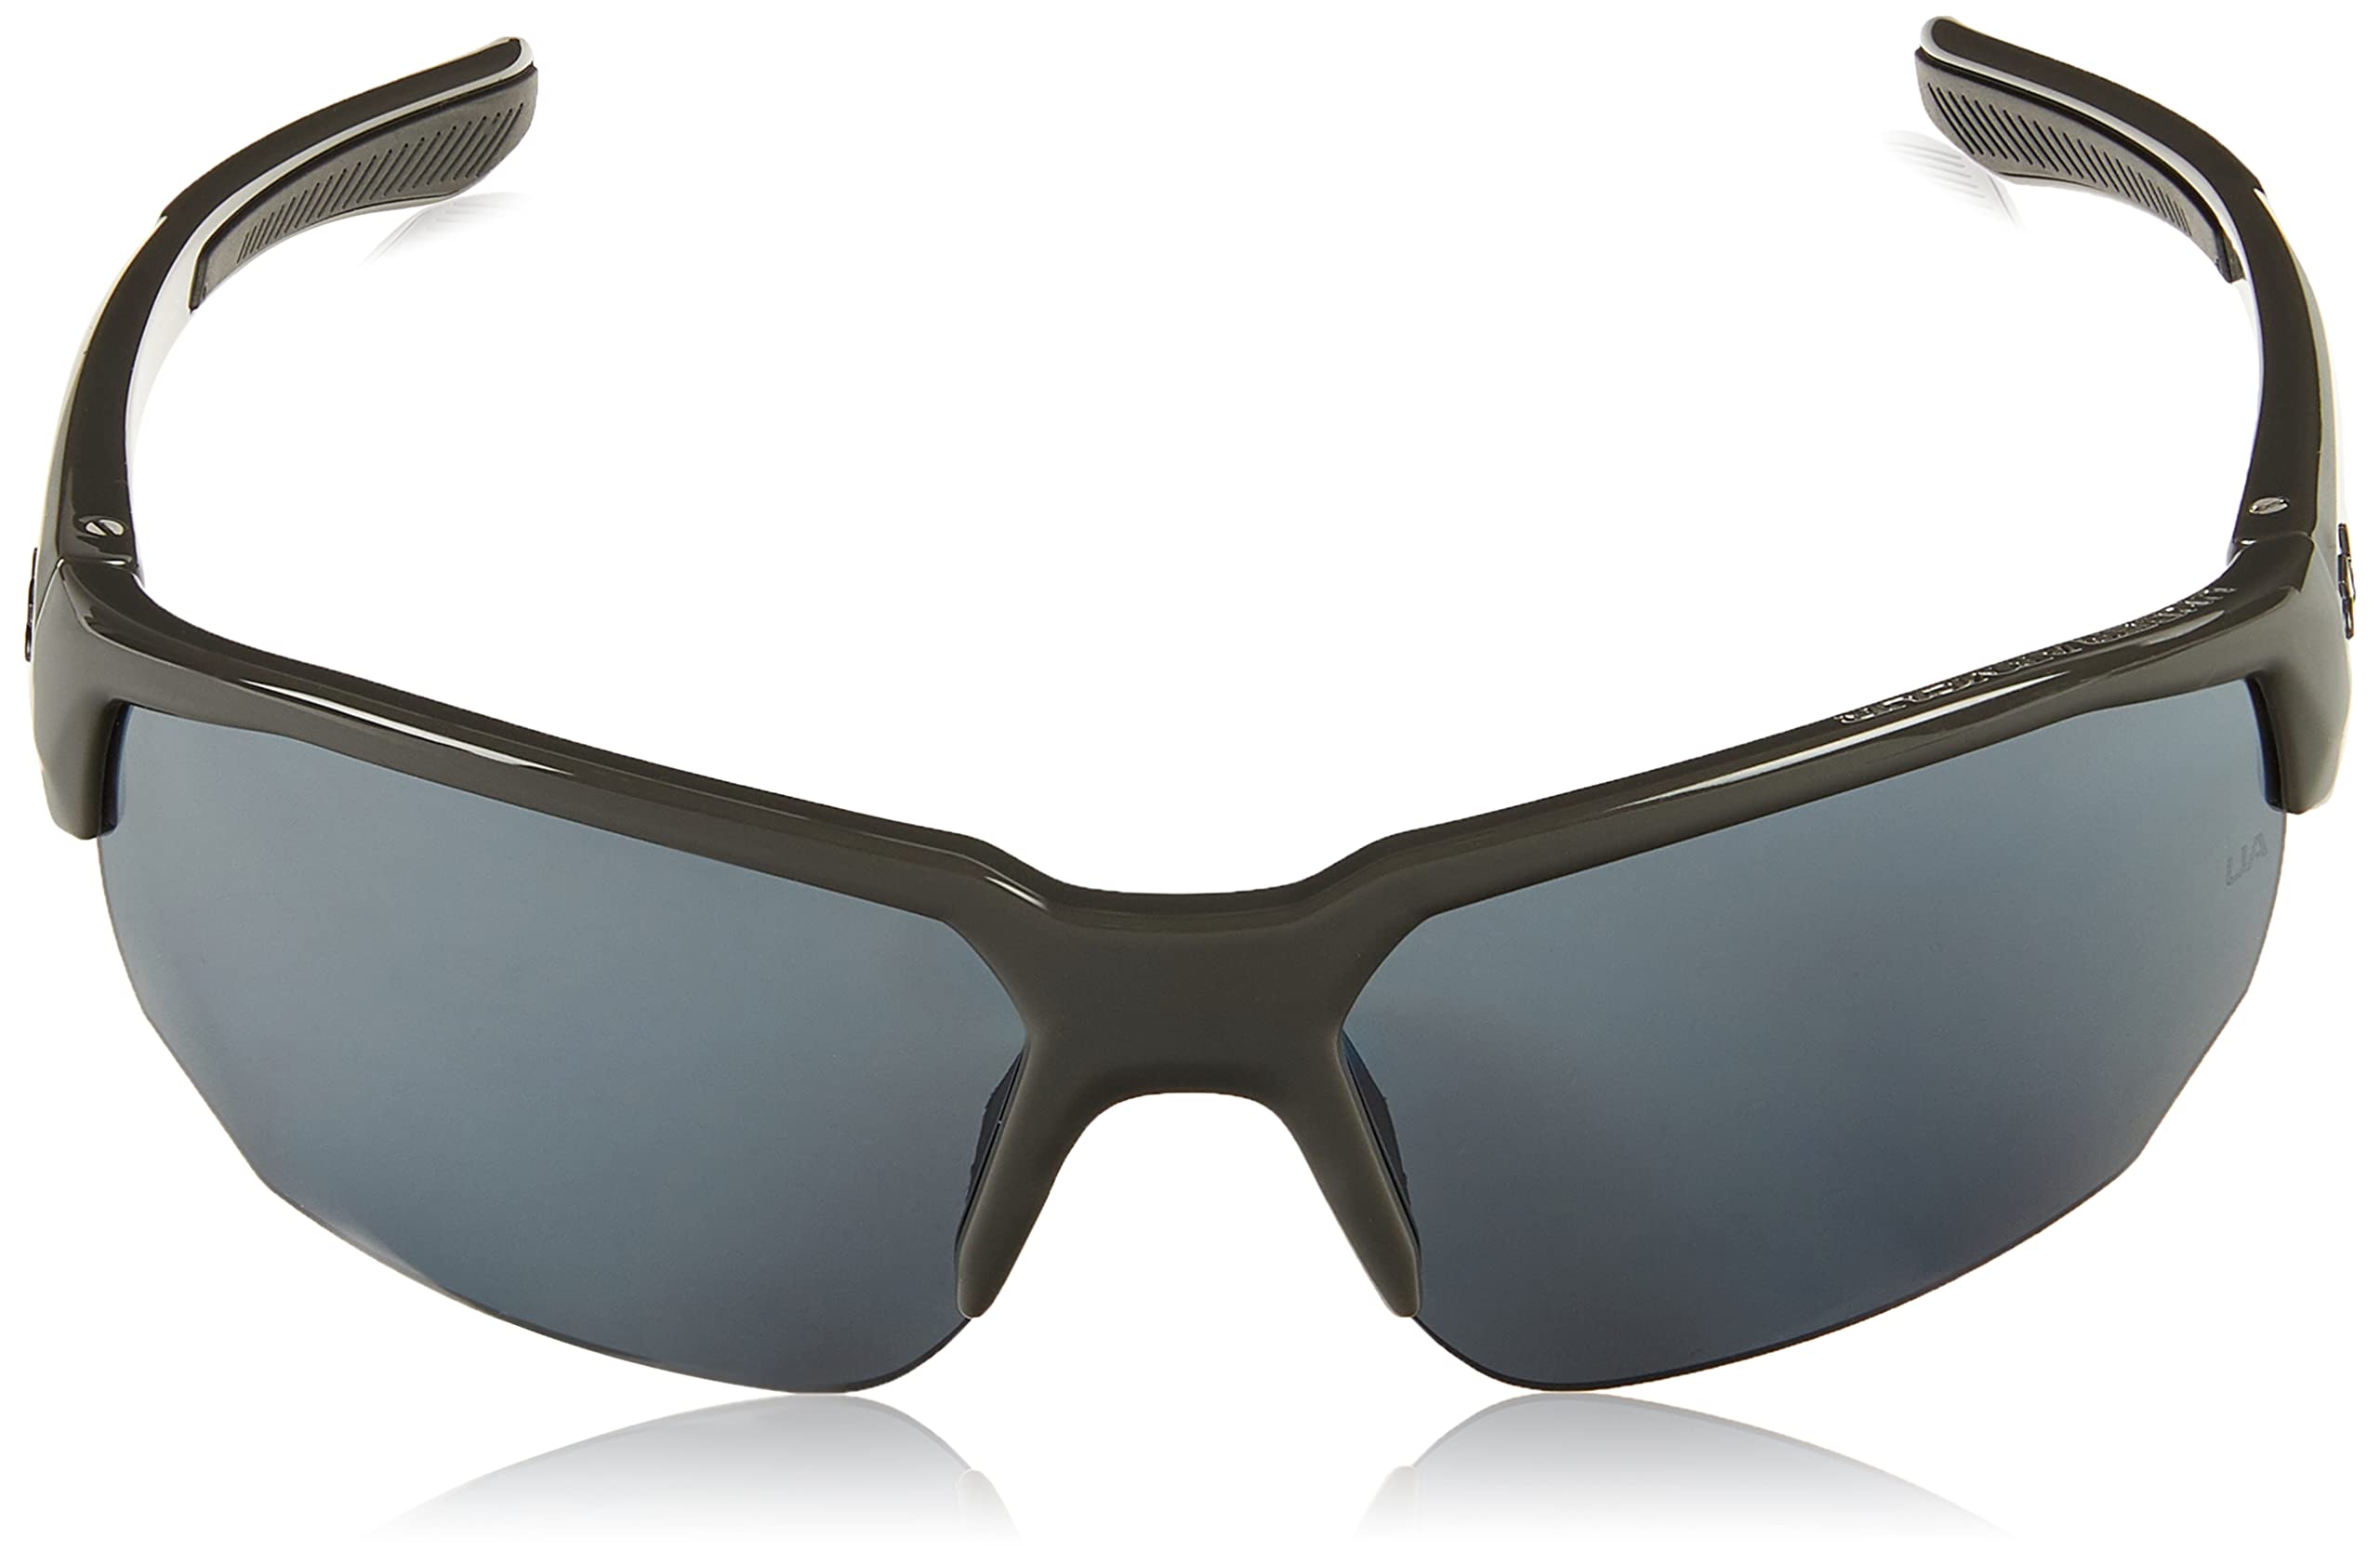 Under Armour Men's Blitzing Wrap Sunglasses, Shiny Jet Gray, 70mm, 9mm